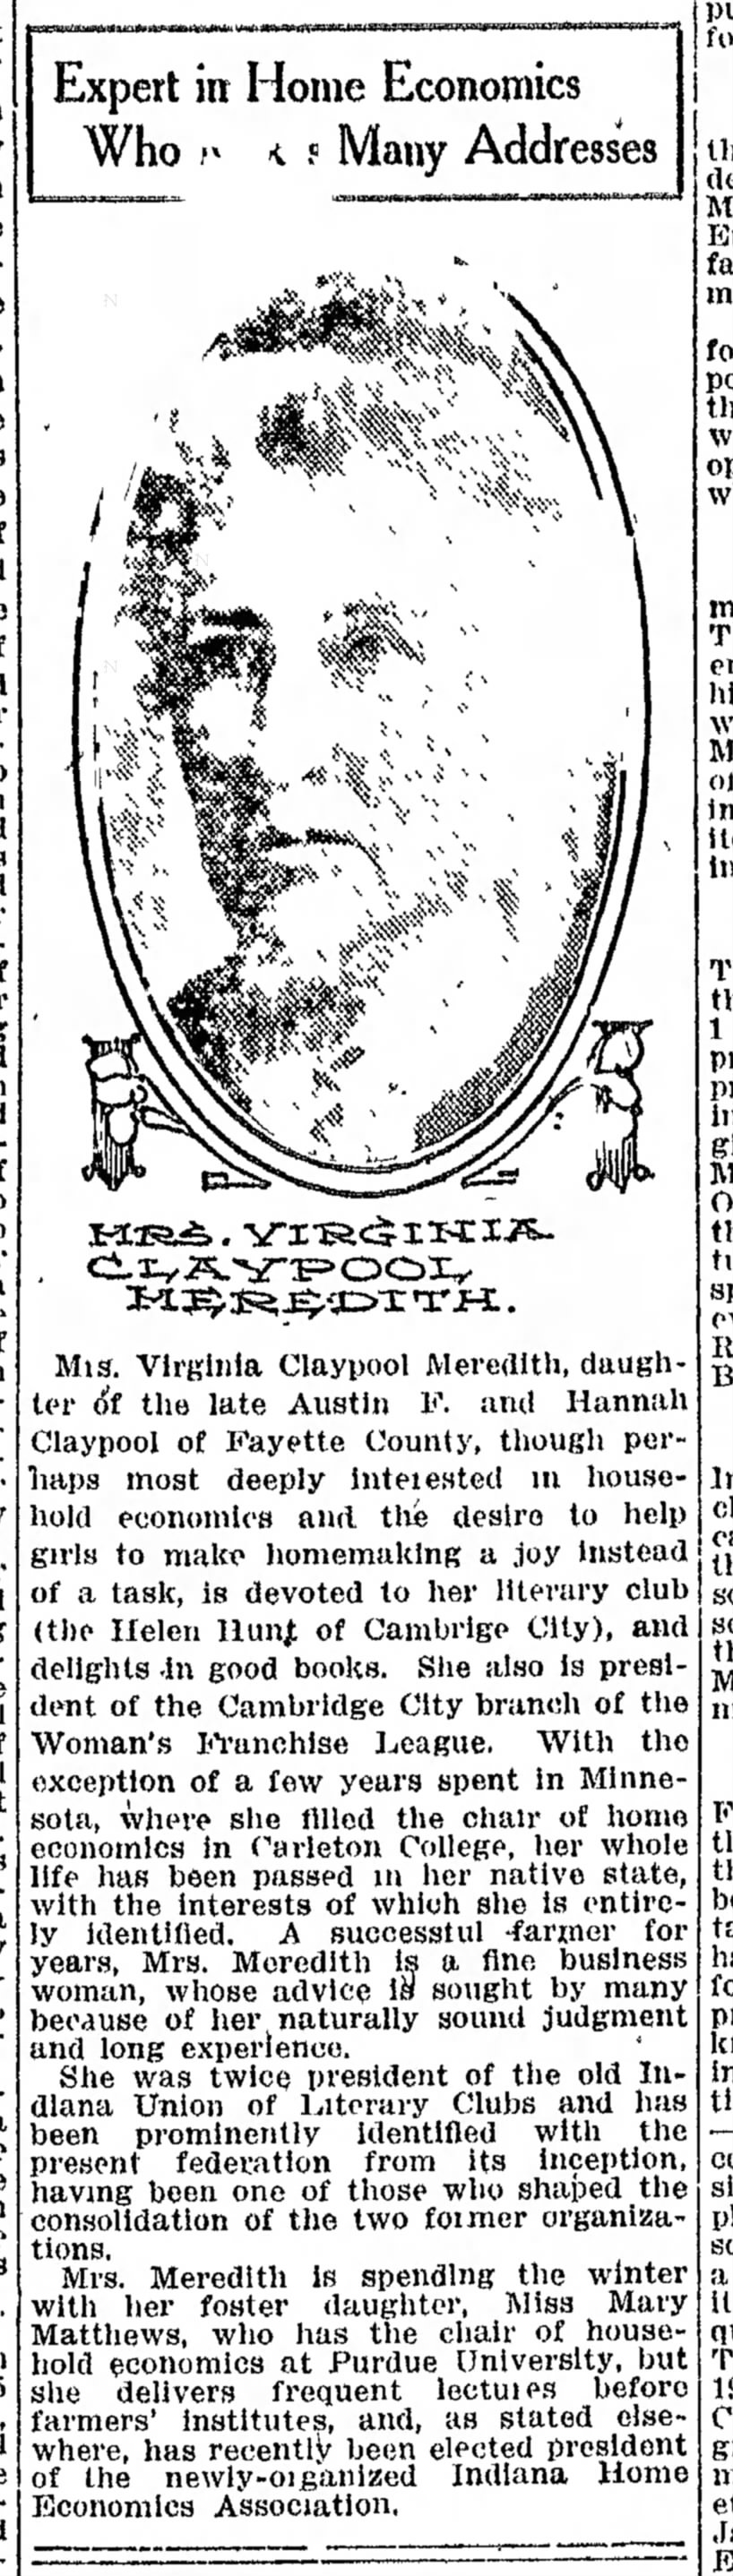 Virginia Claypool Meredith as clubwoman (1913)